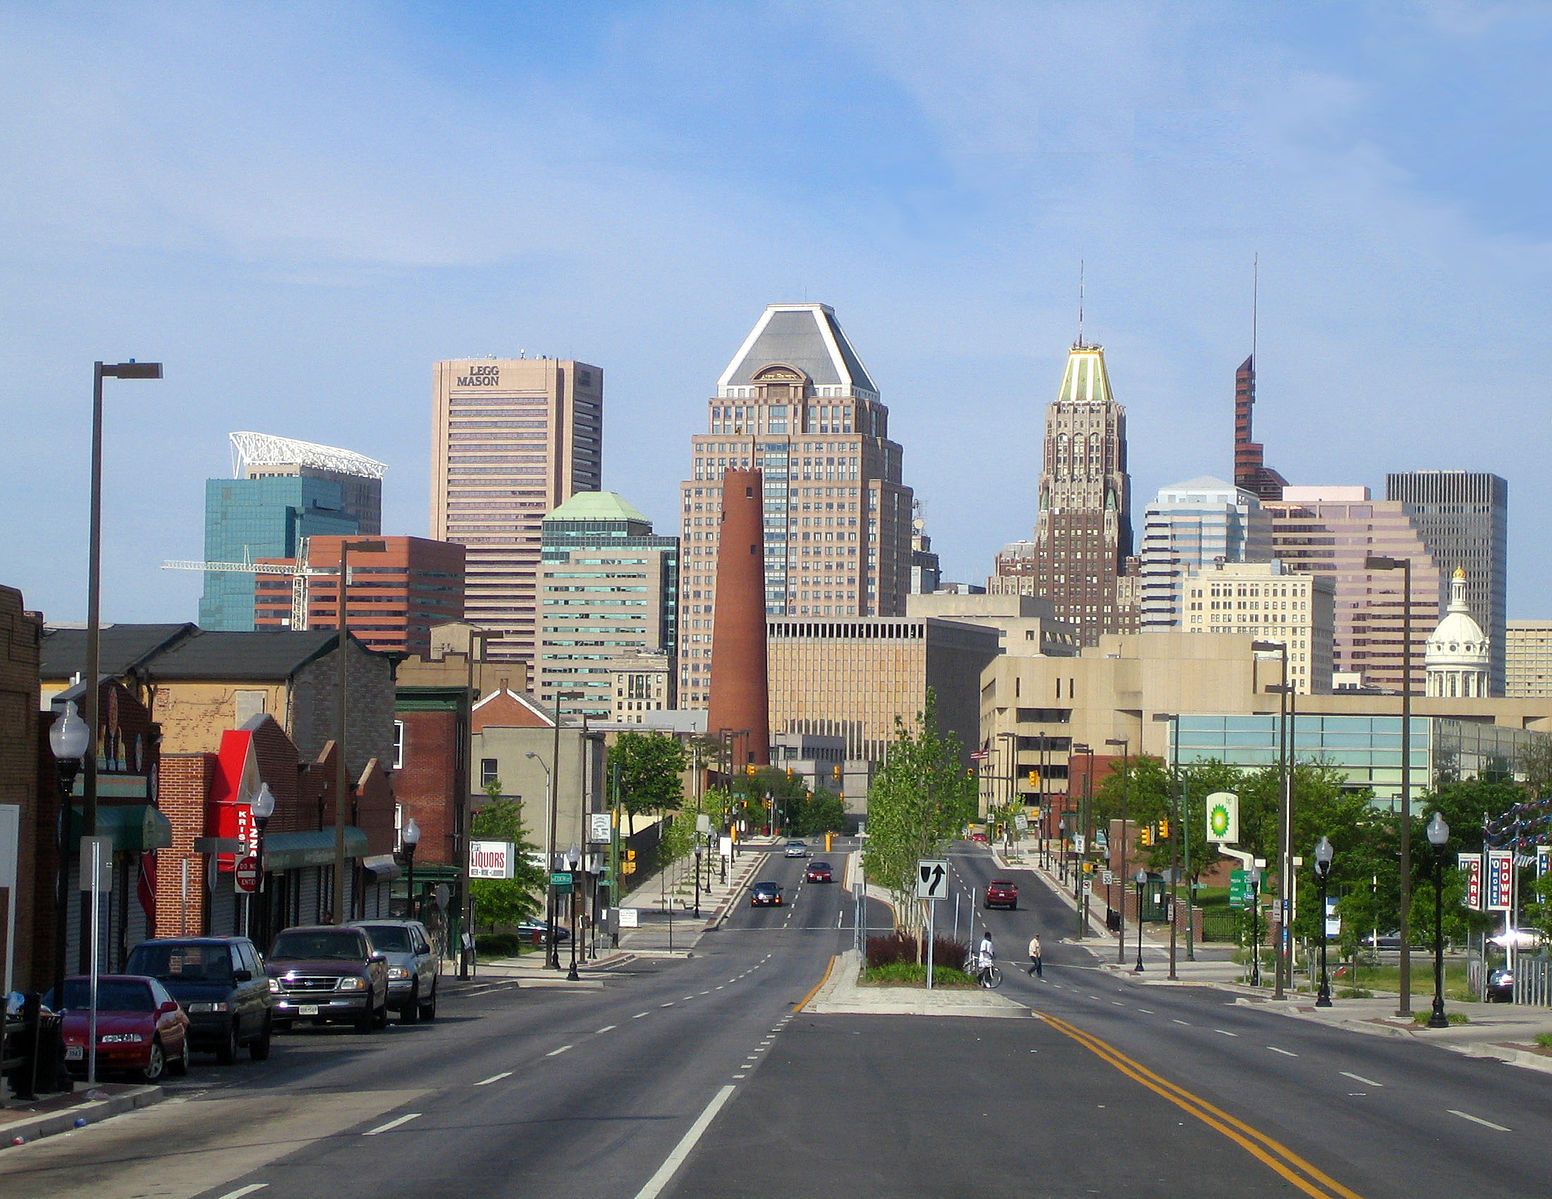 Web Developer Salaries in Baltimore: An In-Depth Look